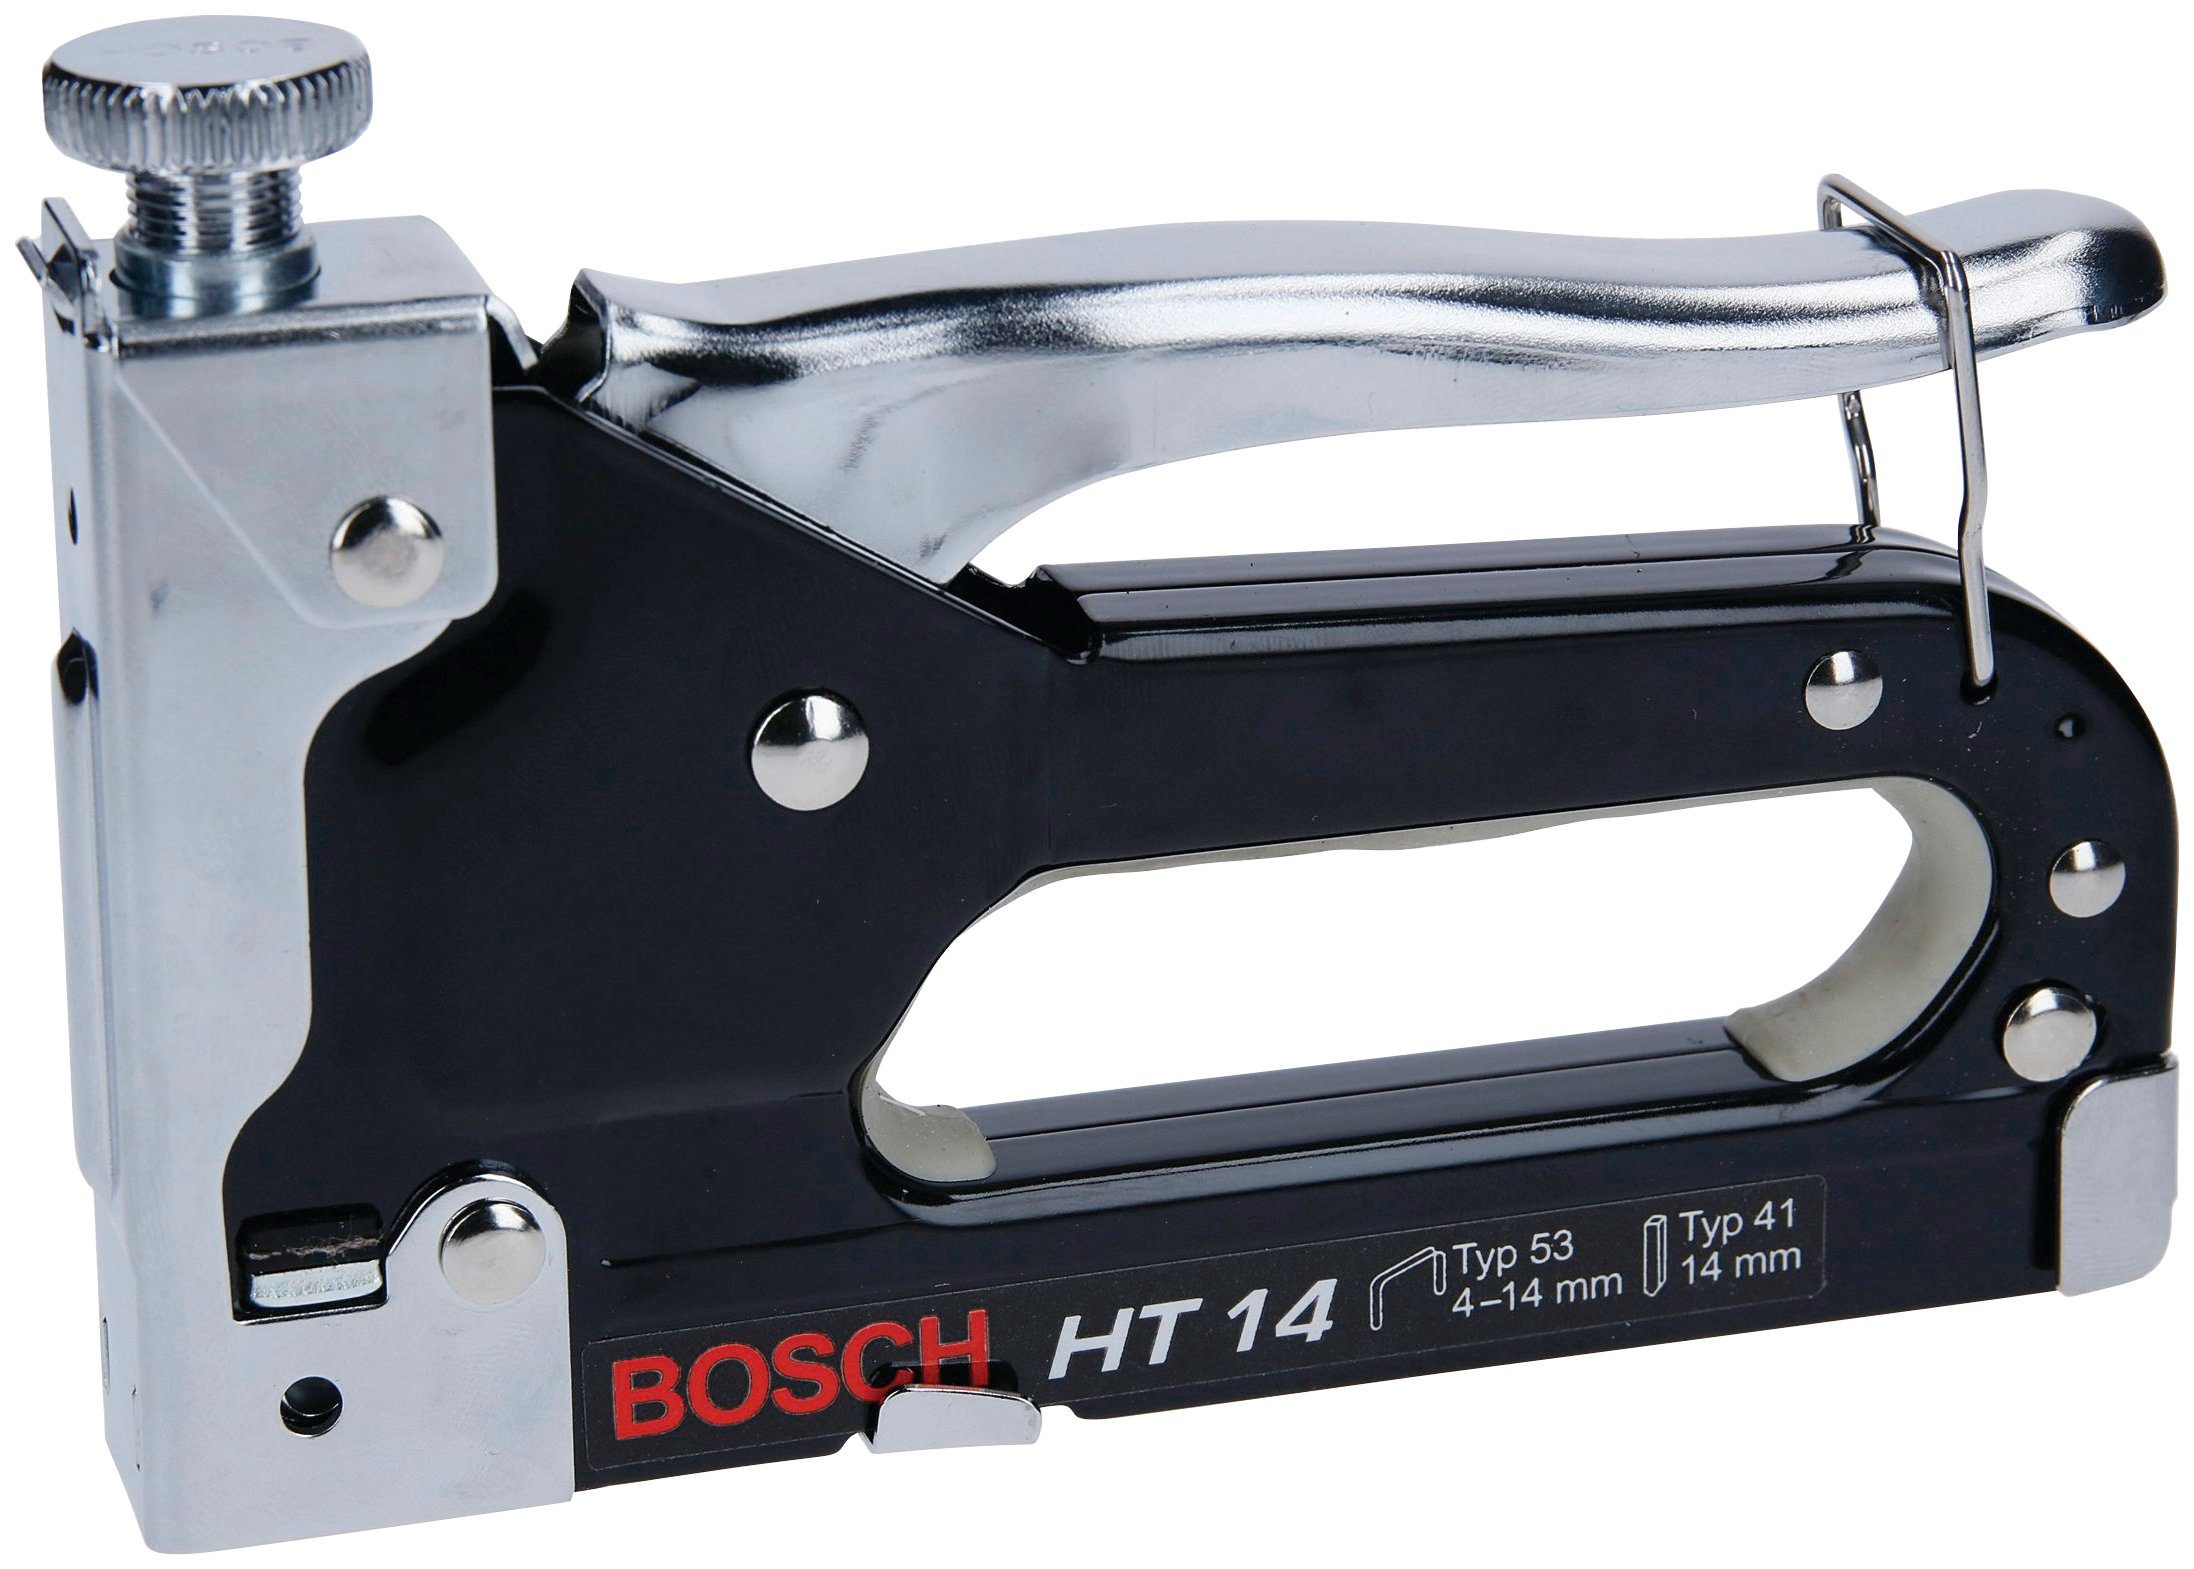 Bosch Professional Handtacker HT 14